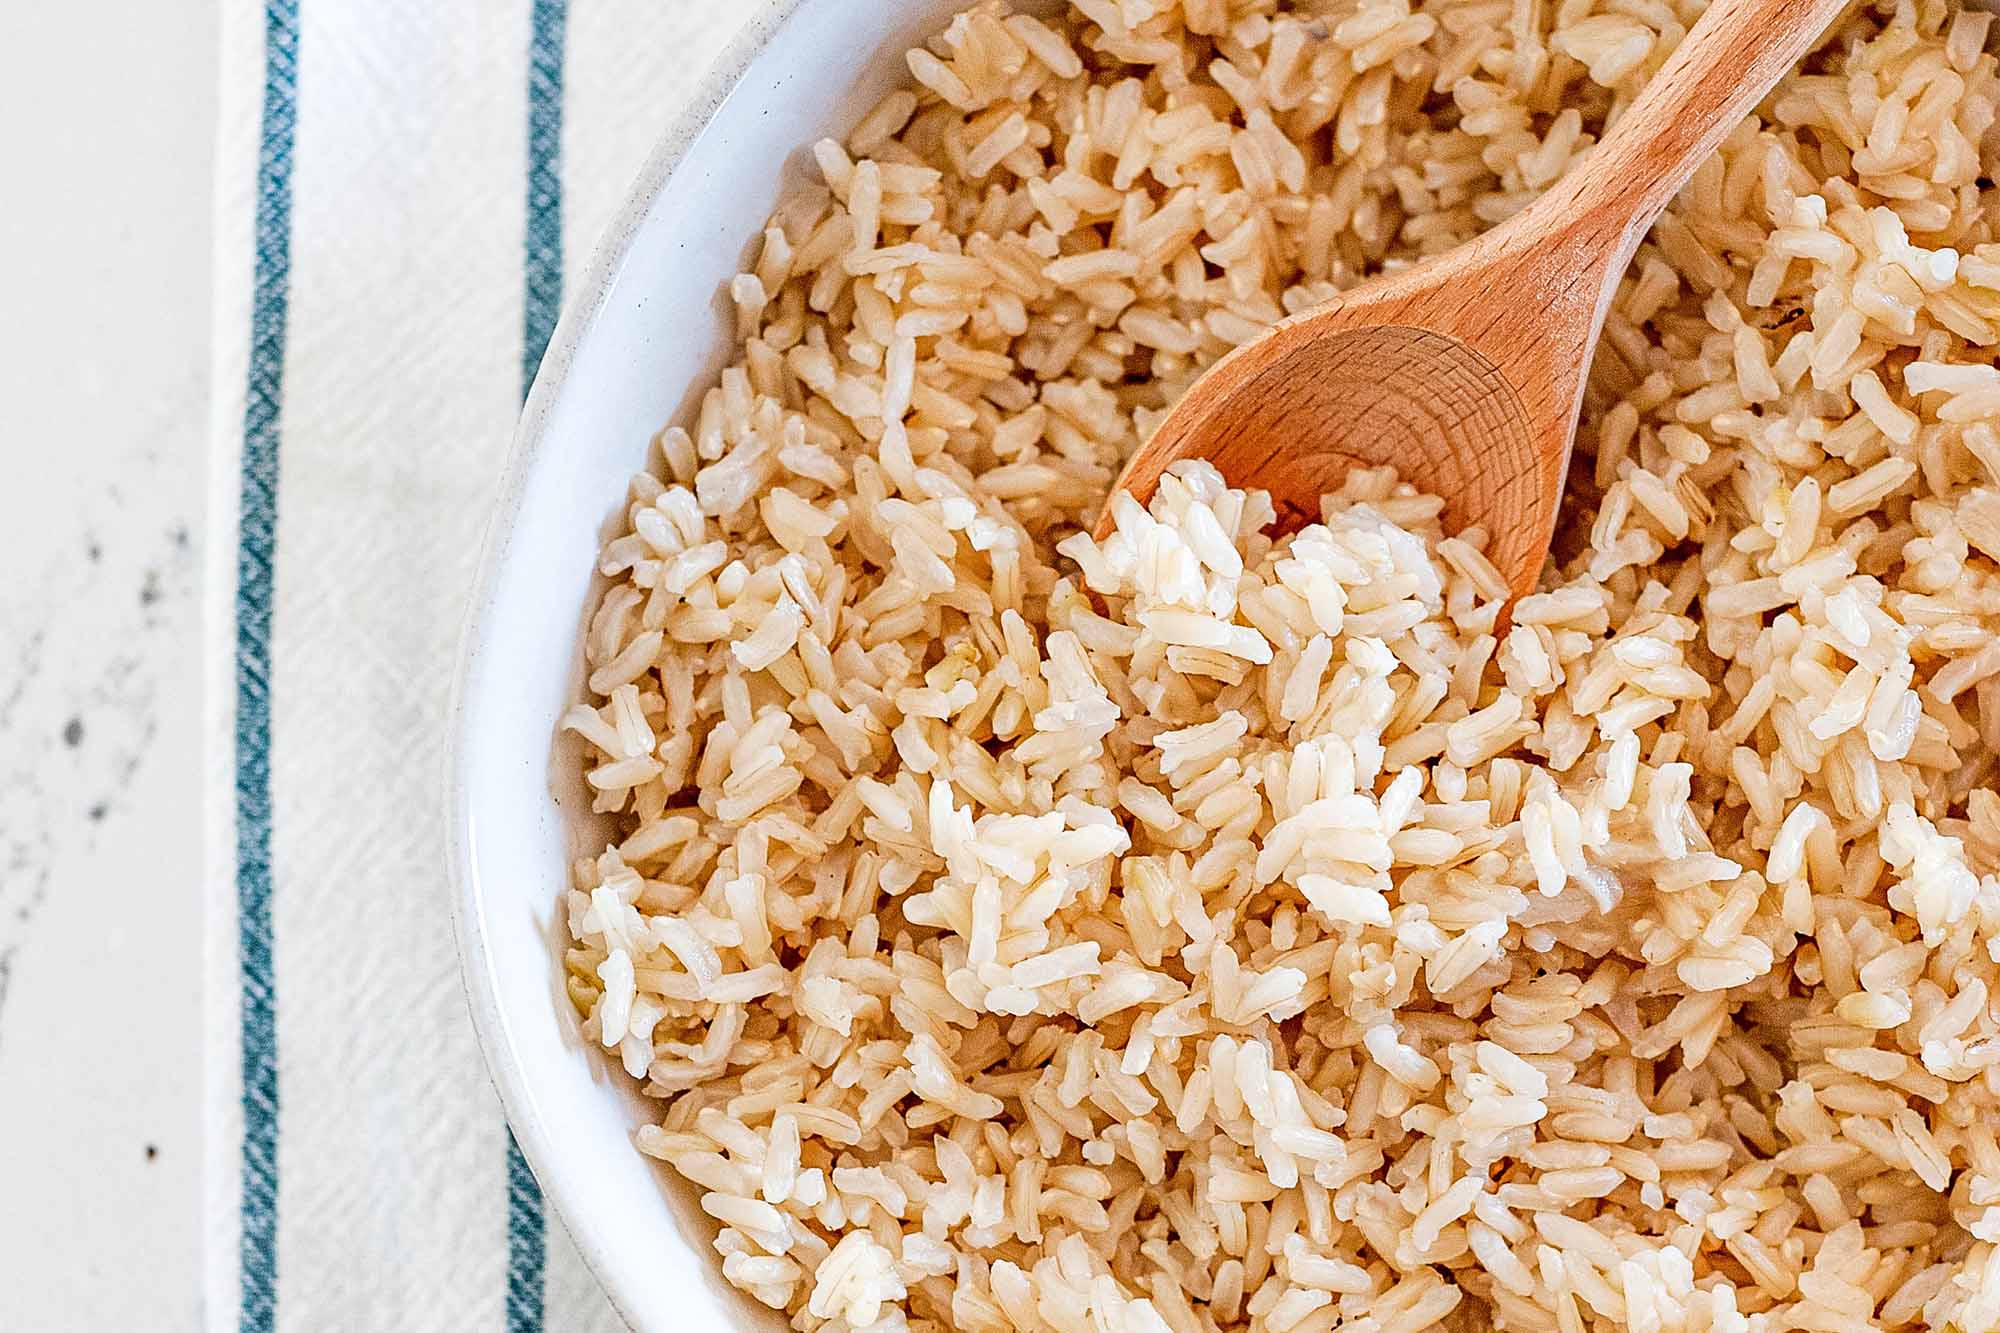 Бурый рис отварной. Рис бурый нешлифованный. Рис бурый нешелушеный. Бурый длиннозерновой рис. Цельнозерновой рис это бурый рис.